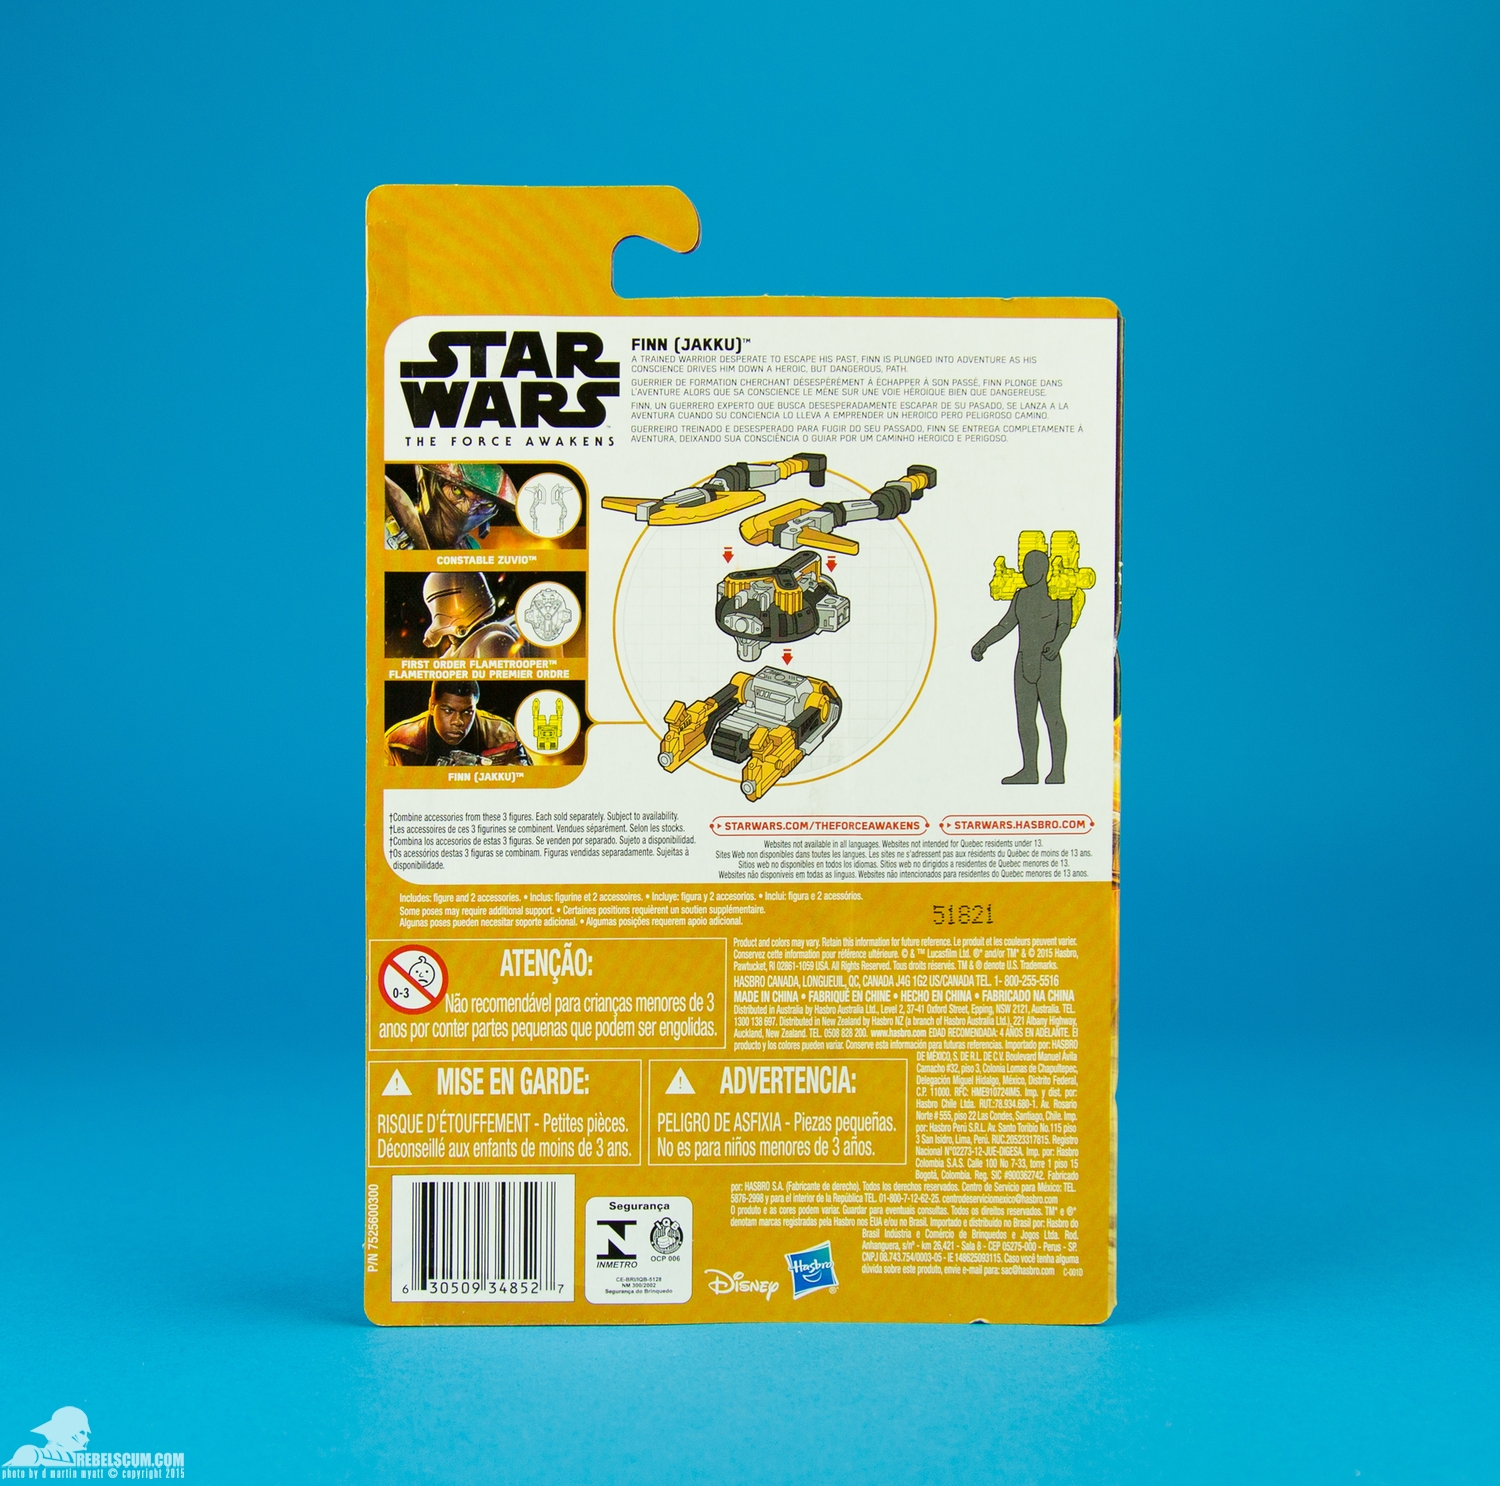 Finn-Jakku-Star-Wars-The-Force-Awakens-Hasbro-019.jpg